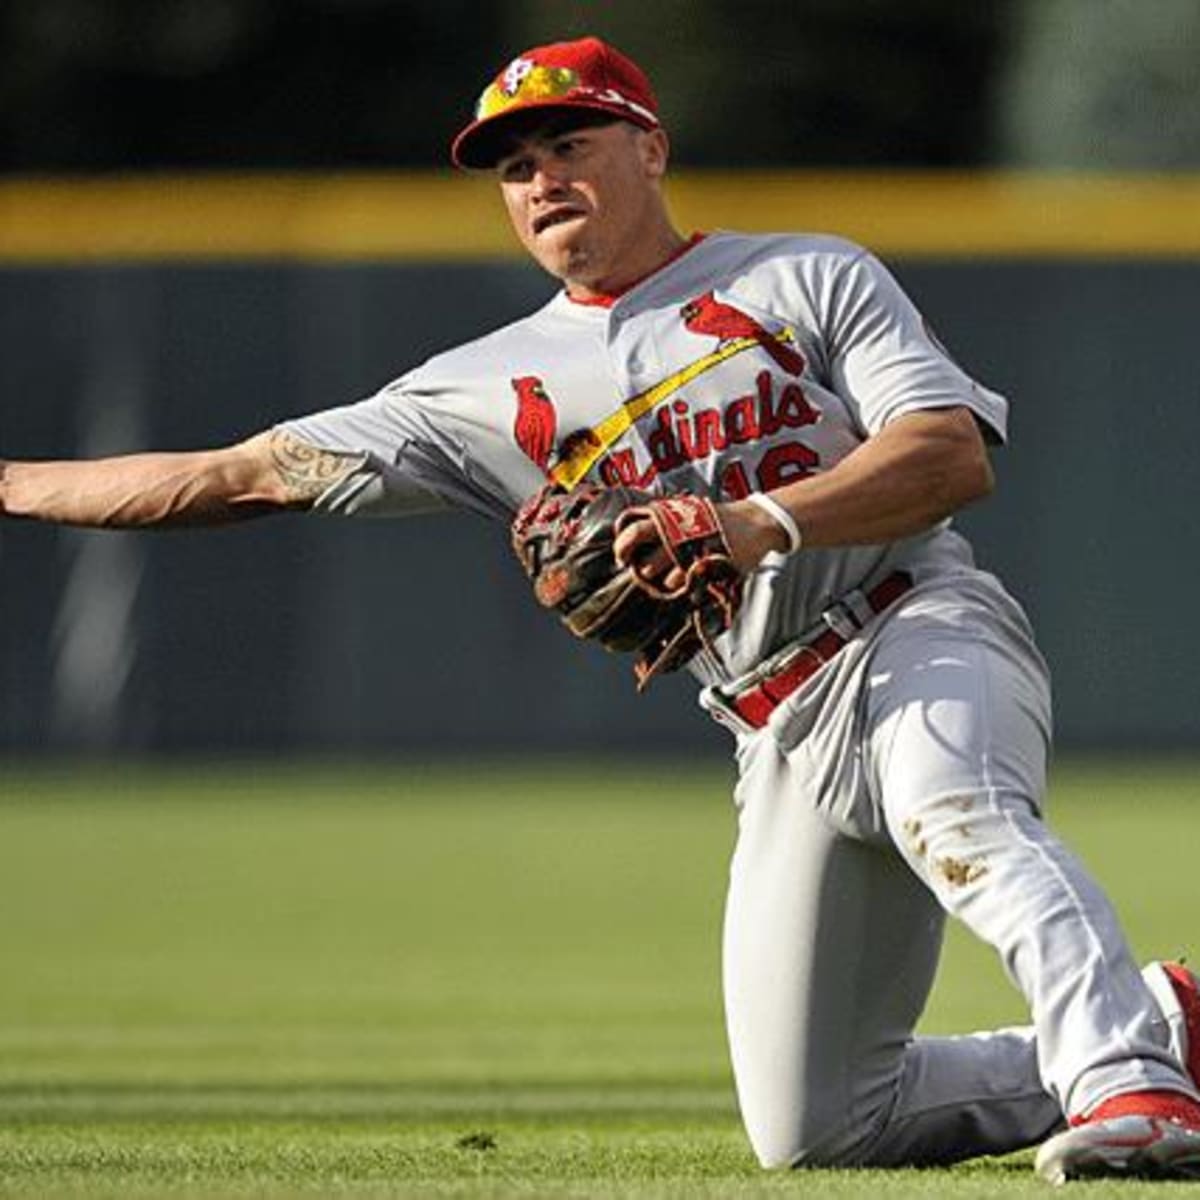 Bourjos brings speed to Cardinals